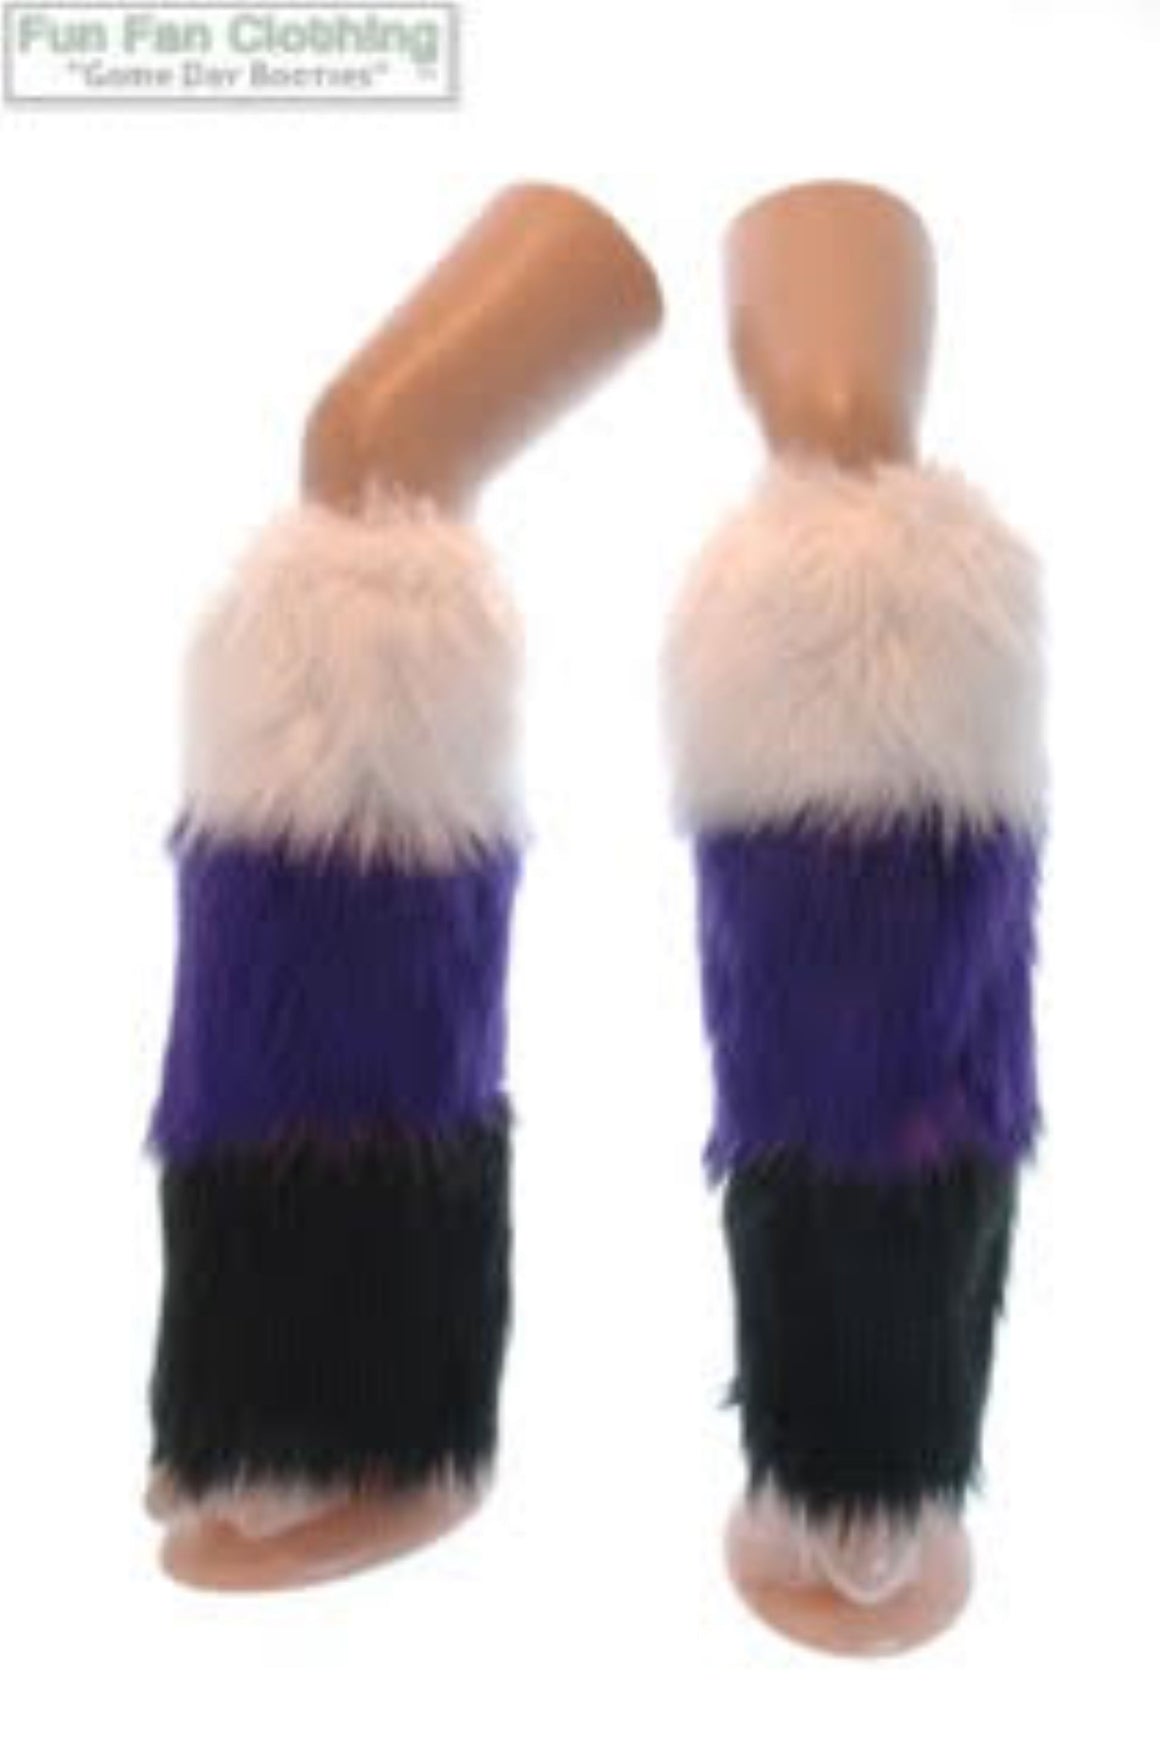 White, Black & Purple Faux Fur Leg Warmers Tricolor - Game Day Booties-Game Day Booties (Leg Warmers)-Fun Fan Clothing Inc. 